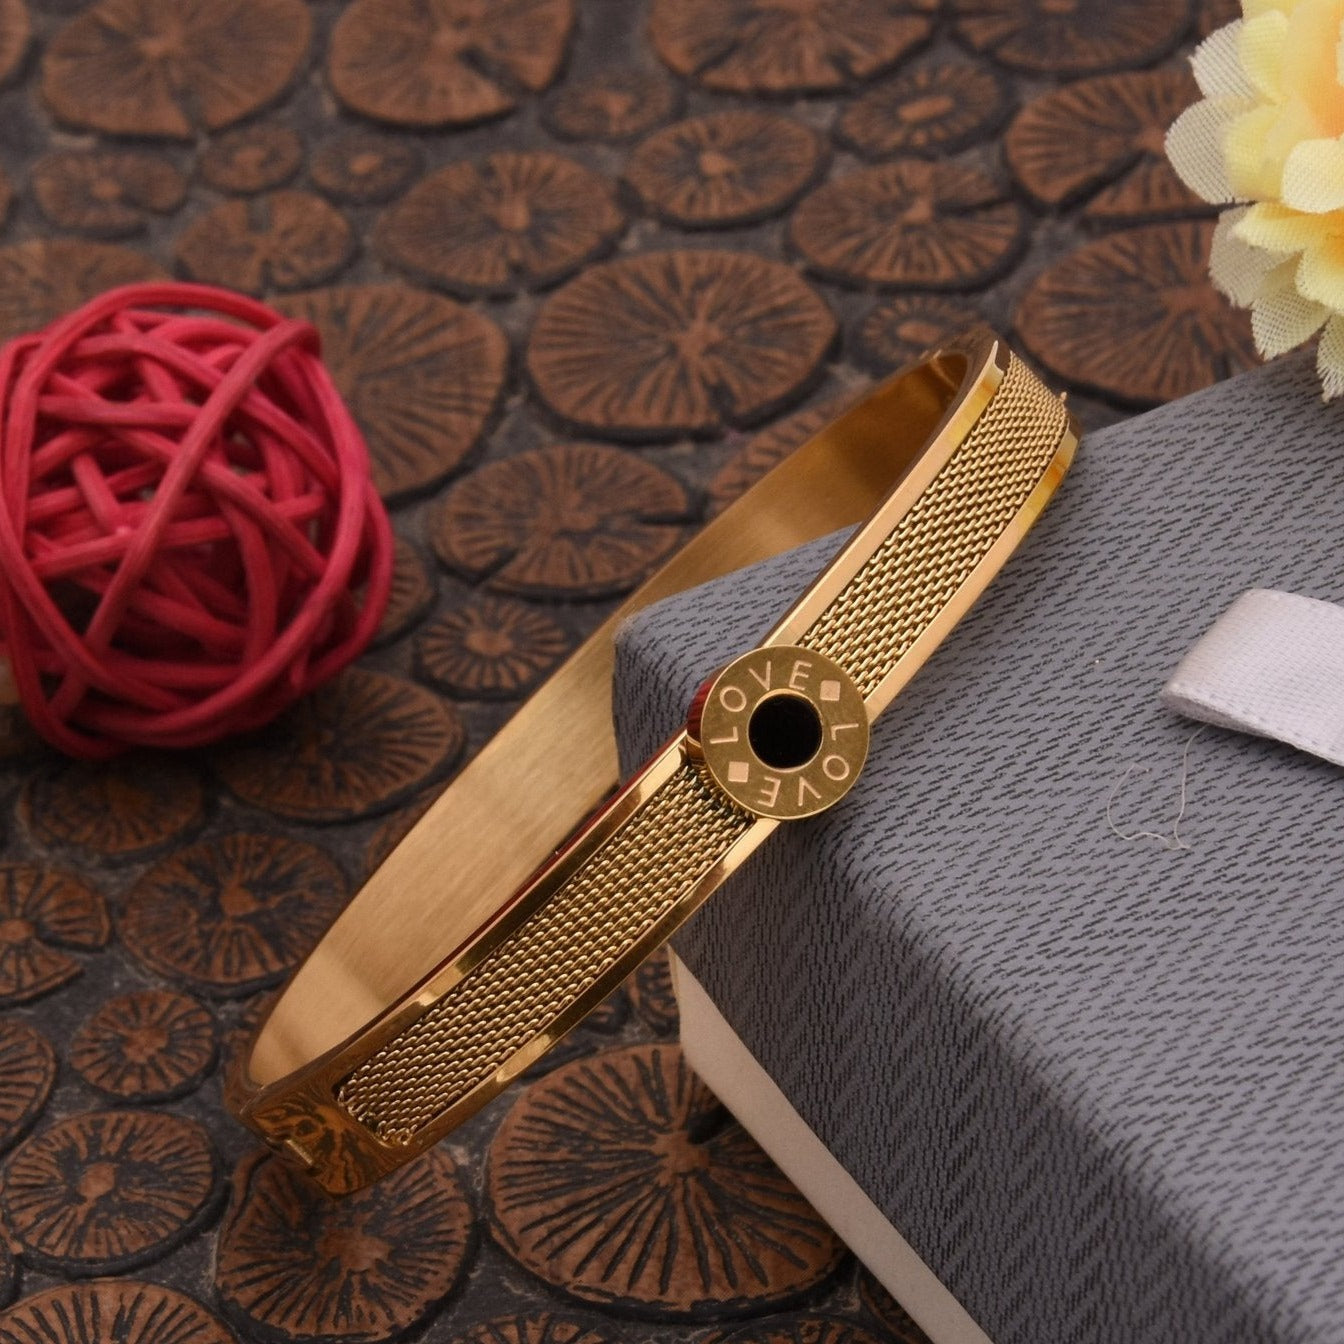 Roman Style Rose Gold Bracelet